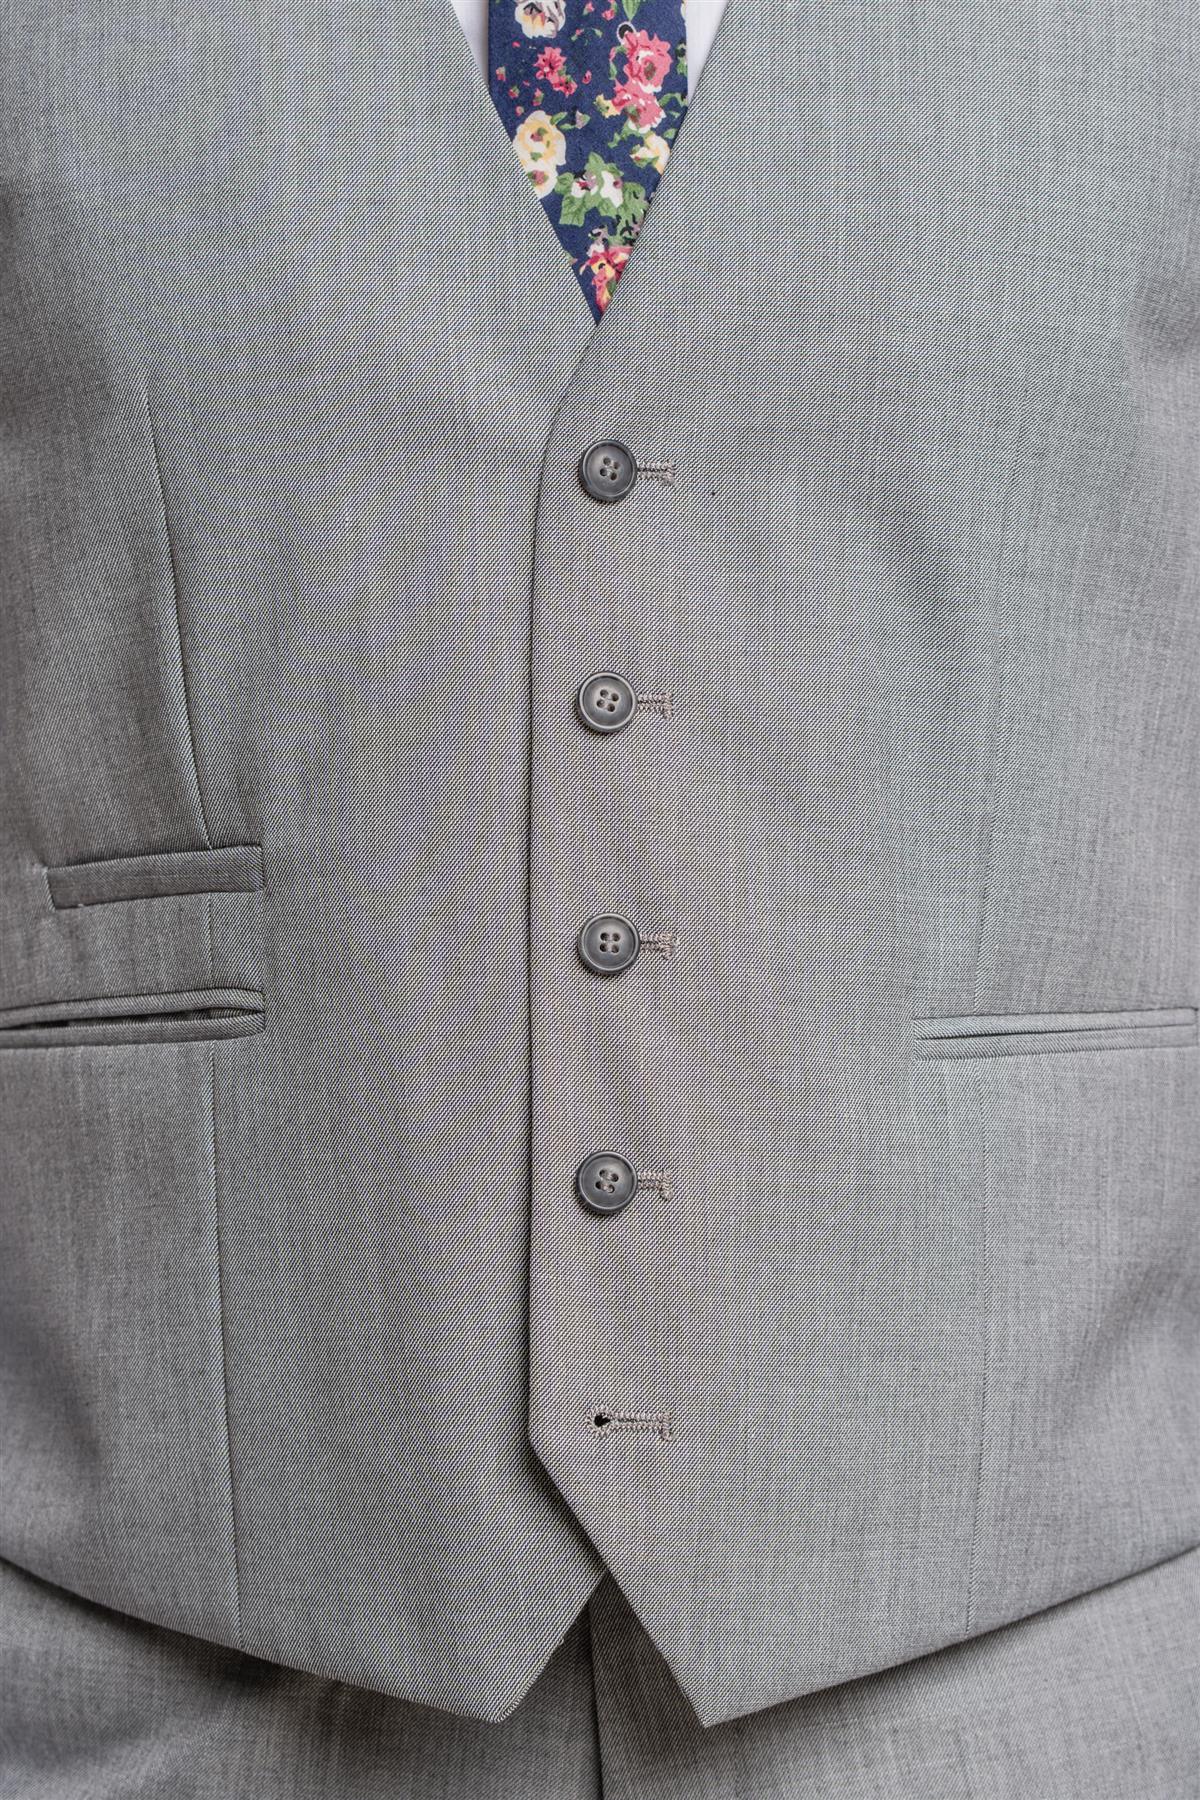 Reegan grey waistcoat front detail